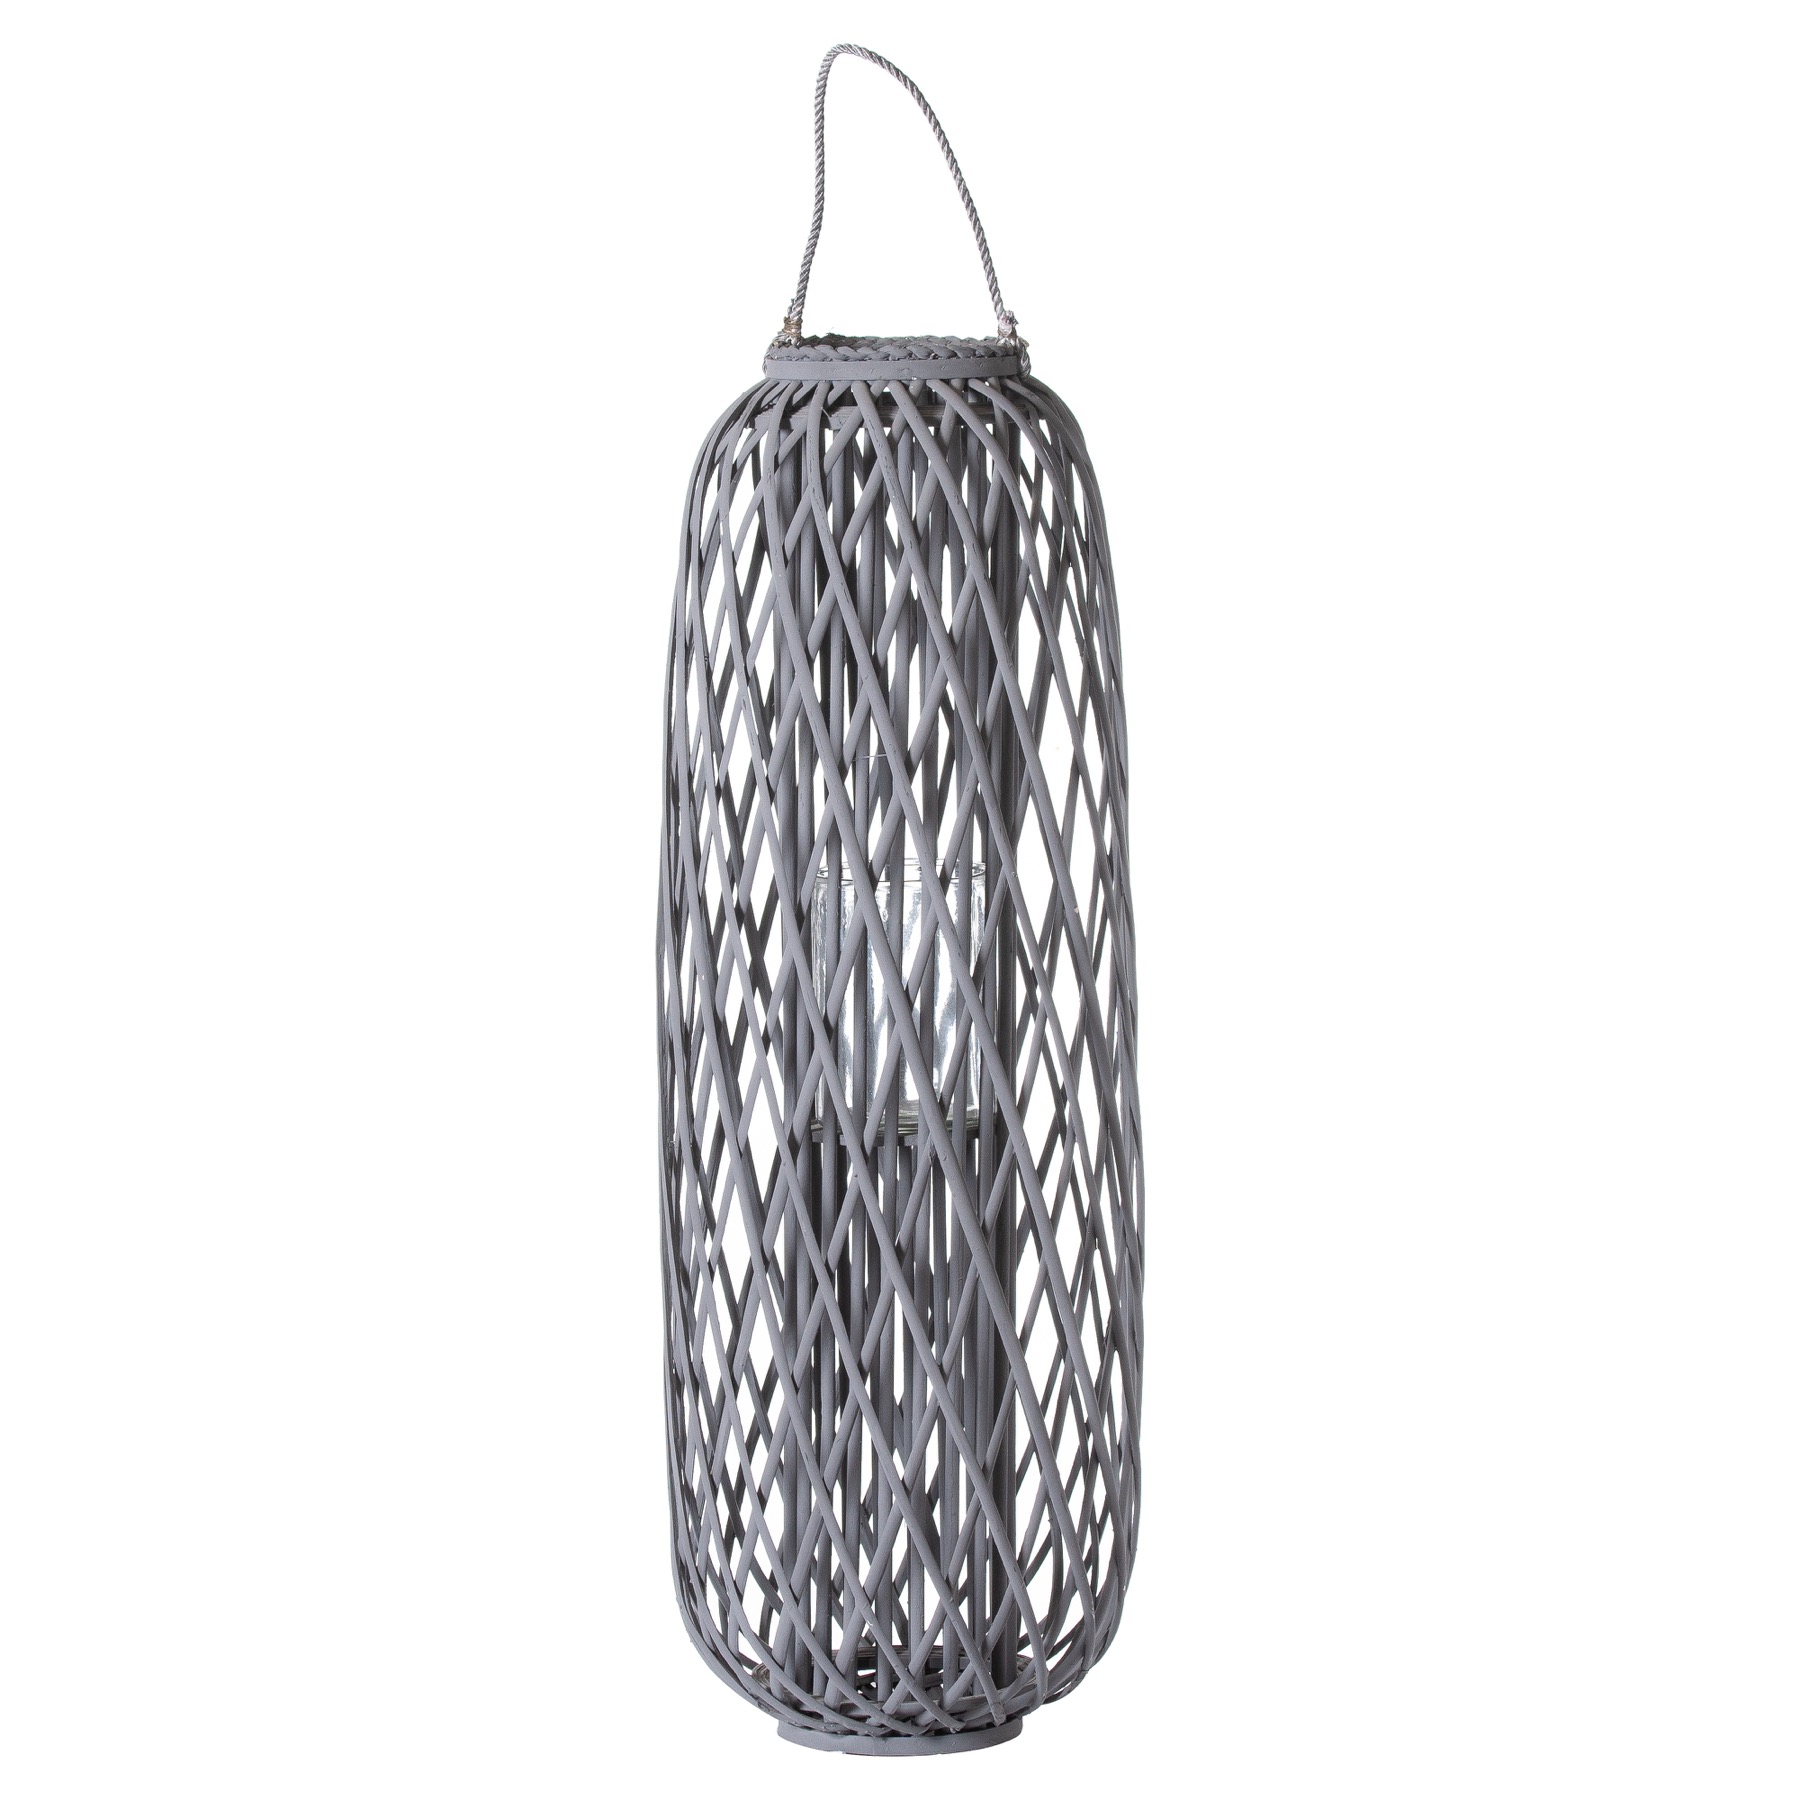 Huge Grey Standing Wicker Lantern - Image 1